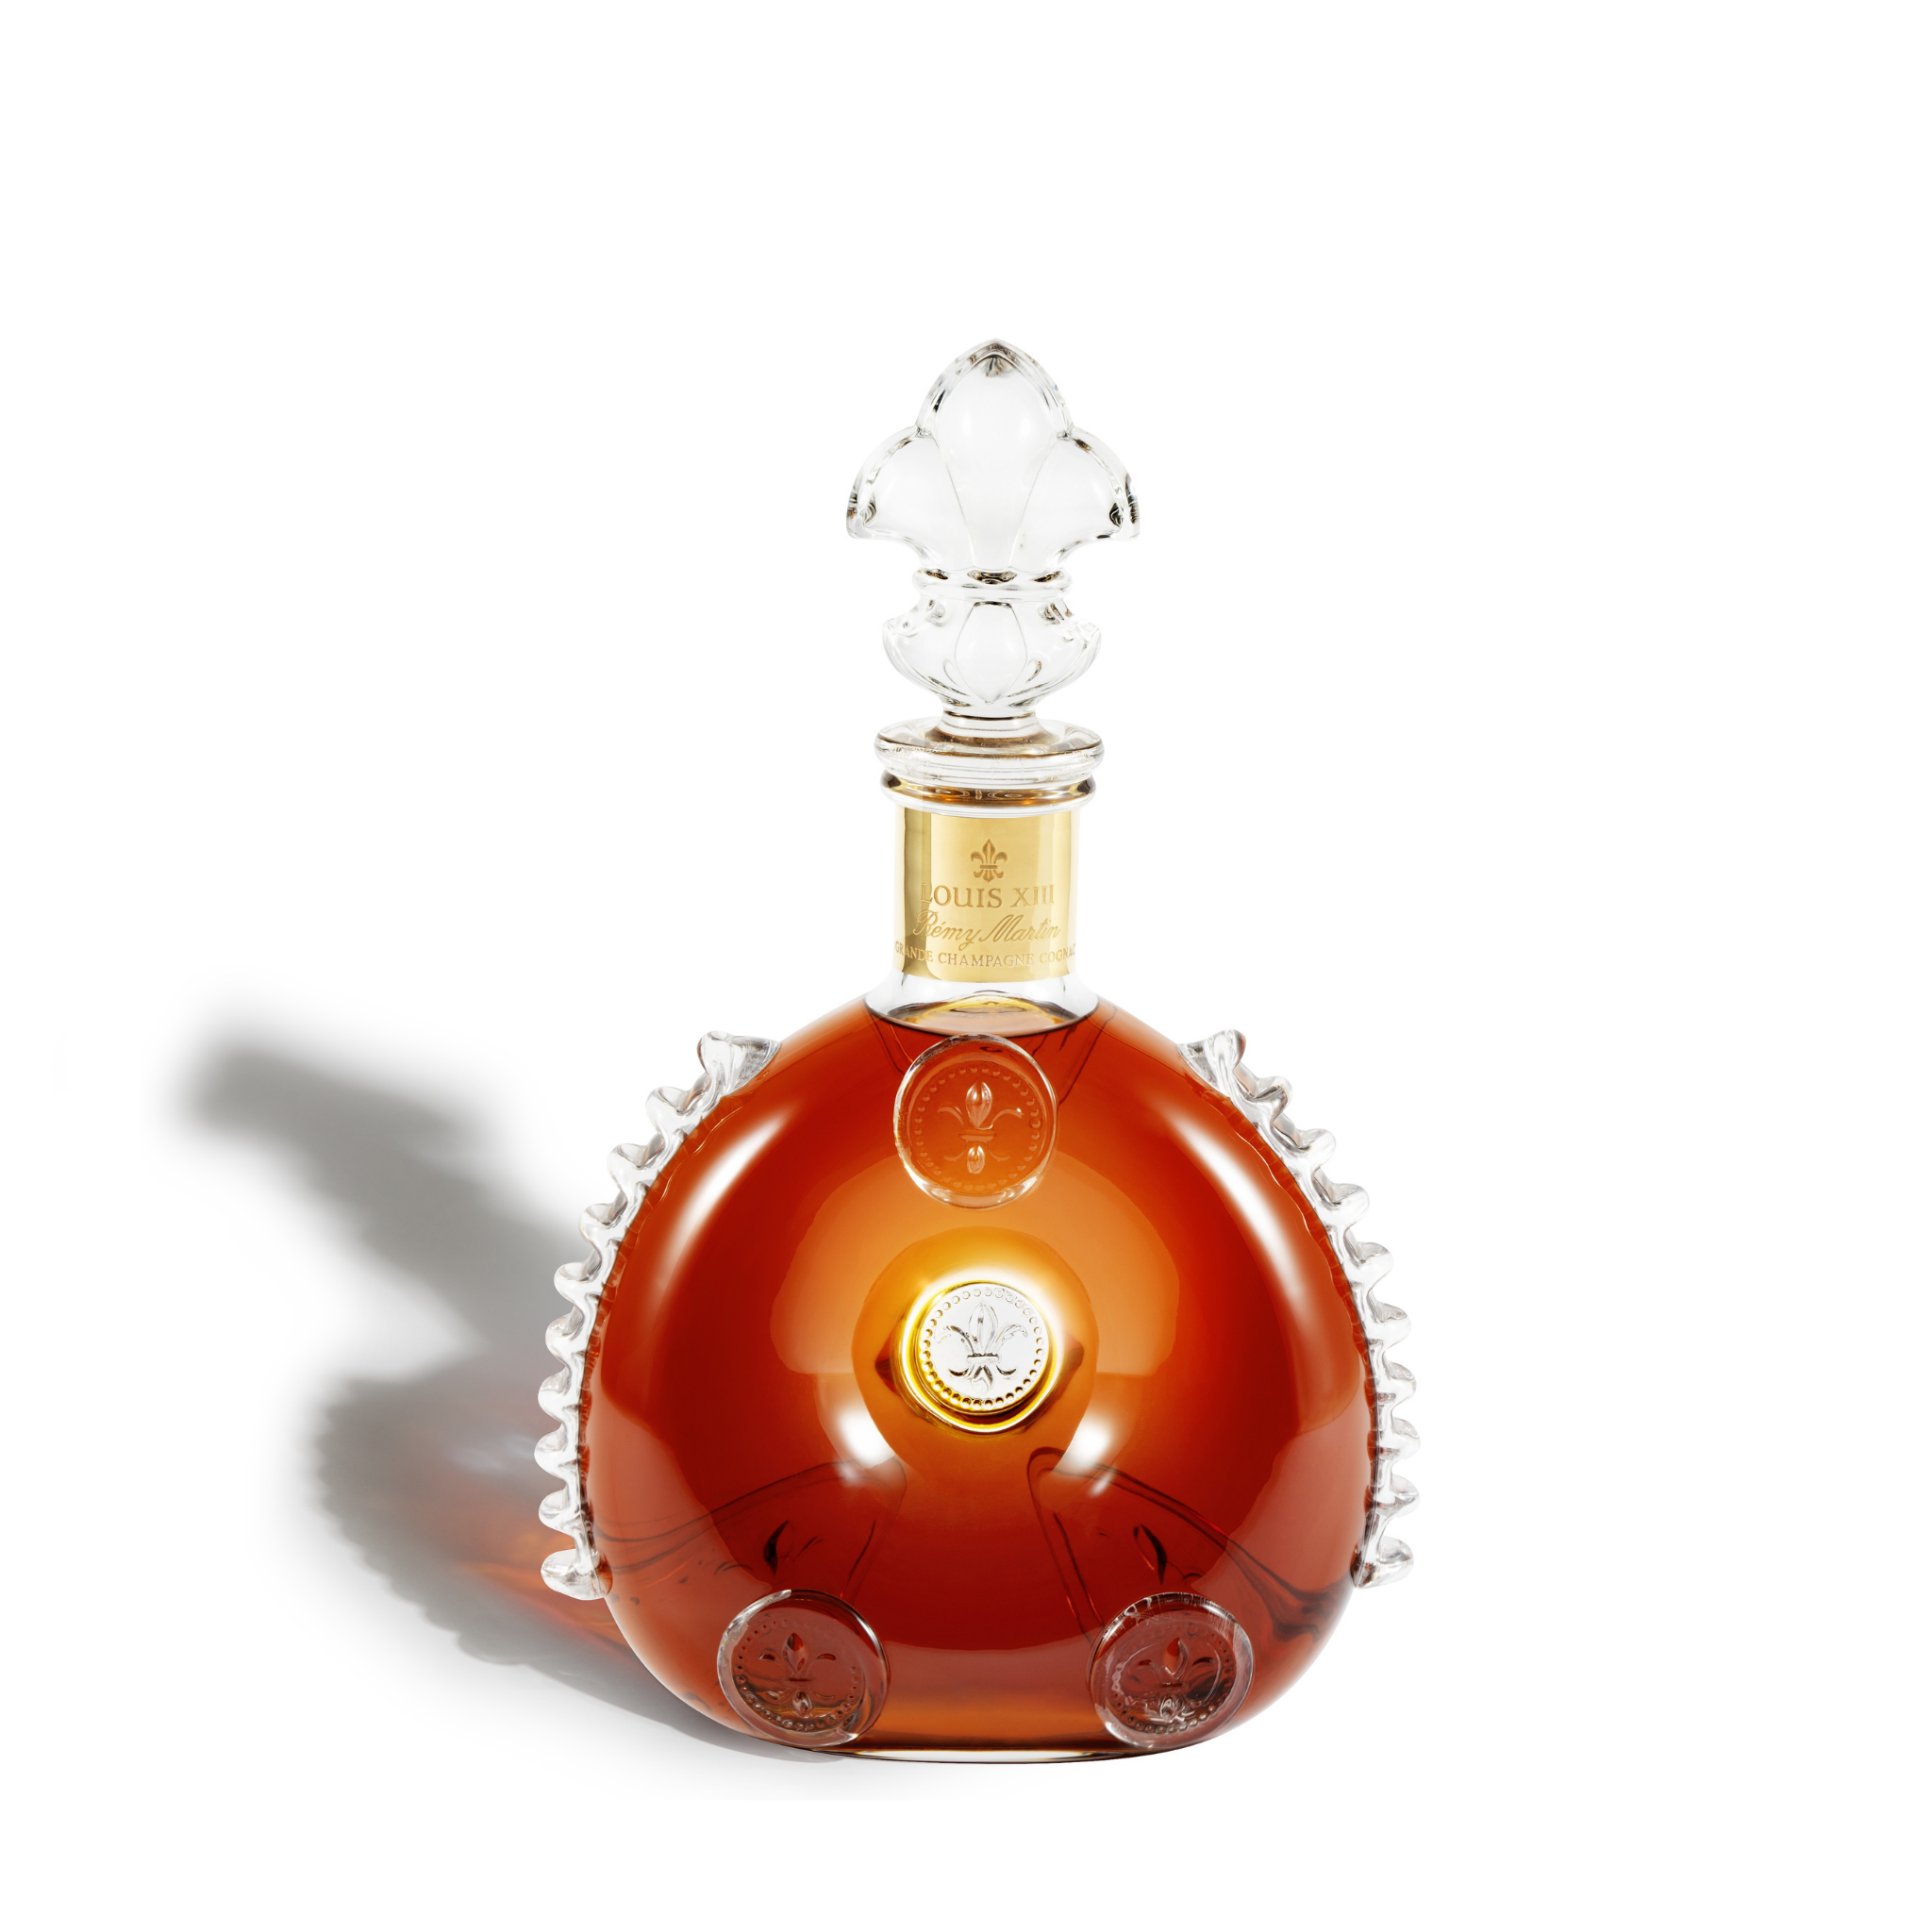 LOUIS XIII Cognac by Rémy Martin